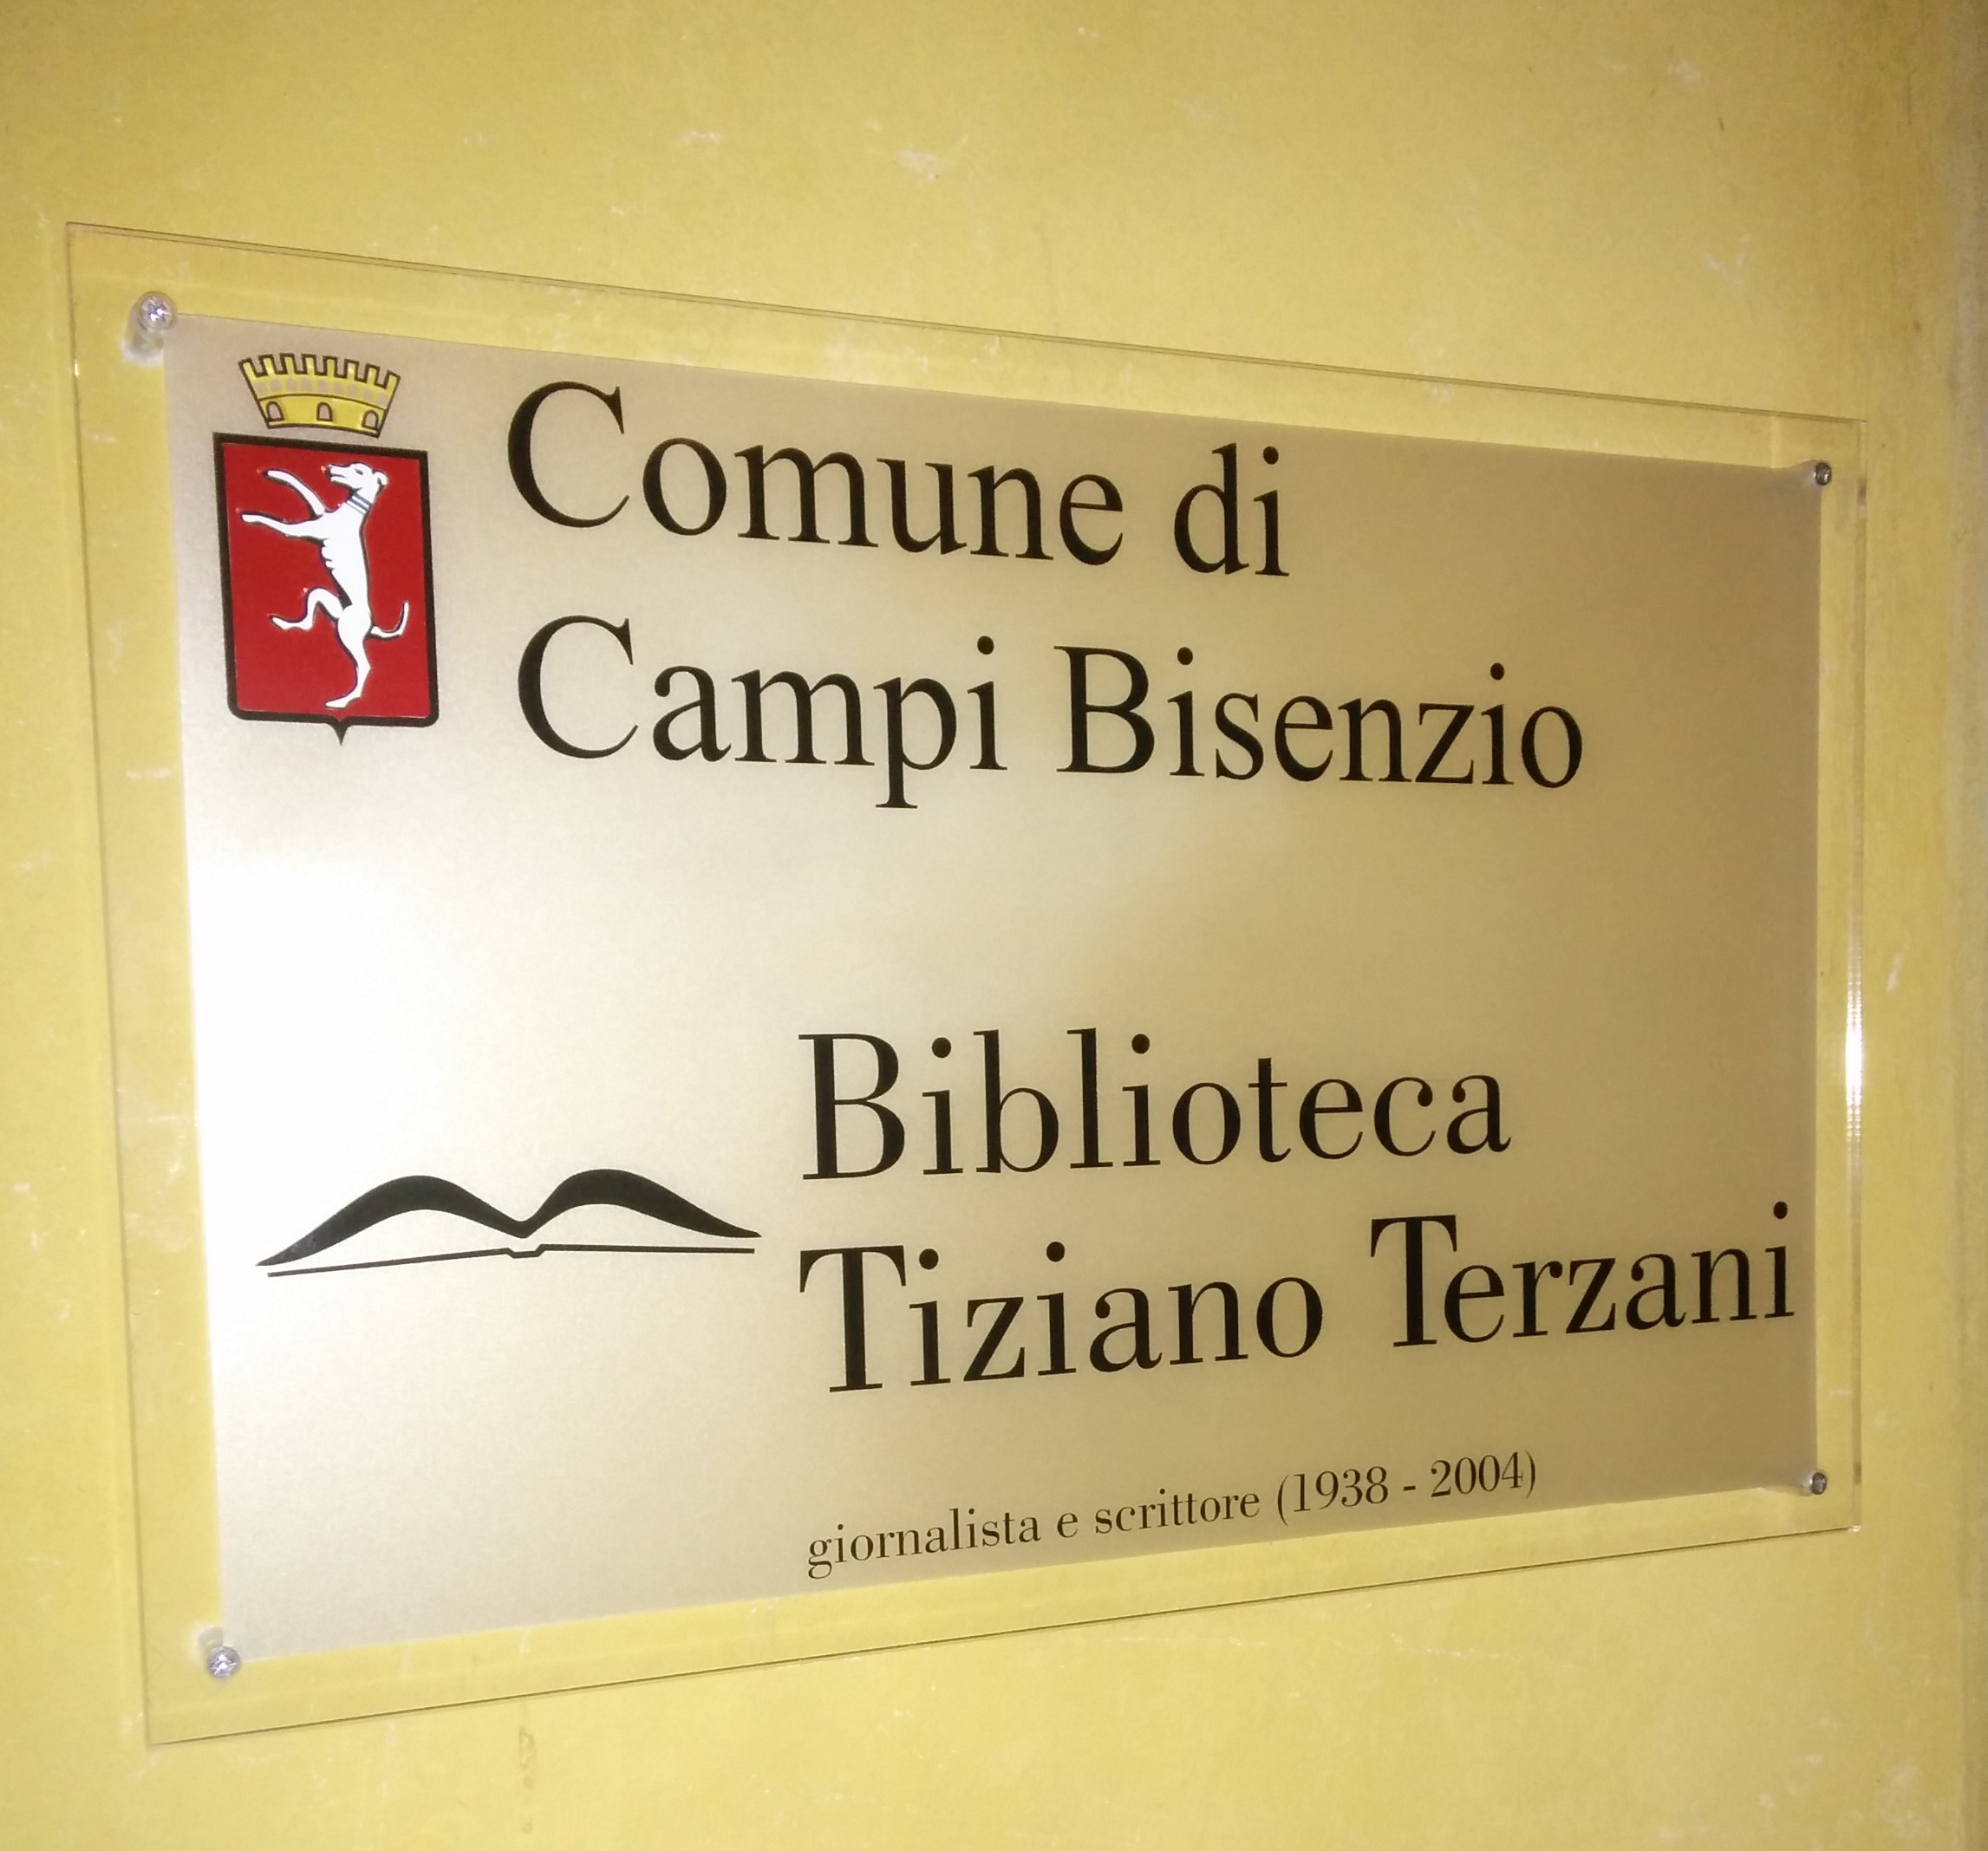 La biblioteca Tiziano Terzani